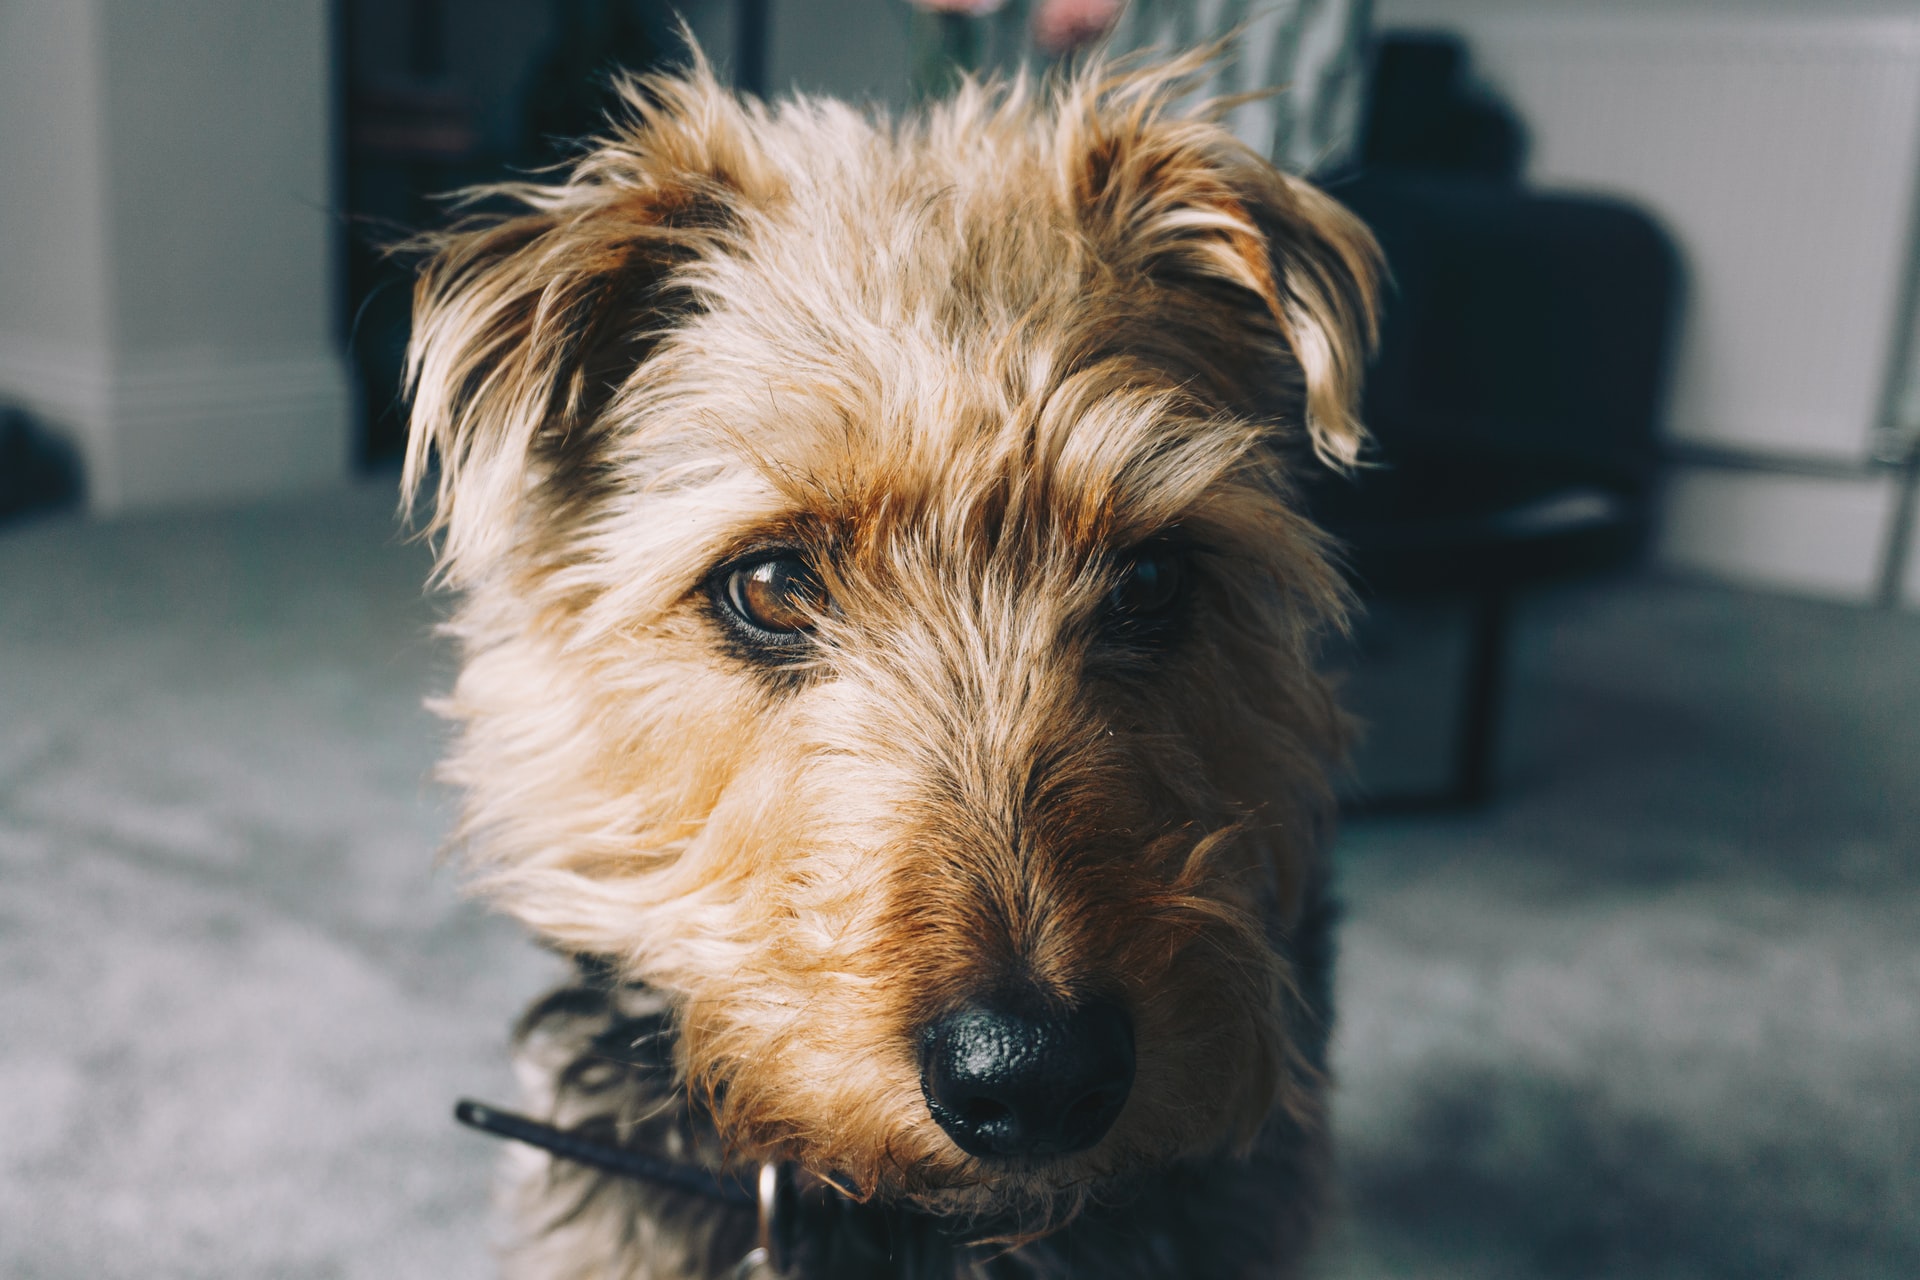 Welsh Terrier. Photo by Greg Trowman on Unsplash